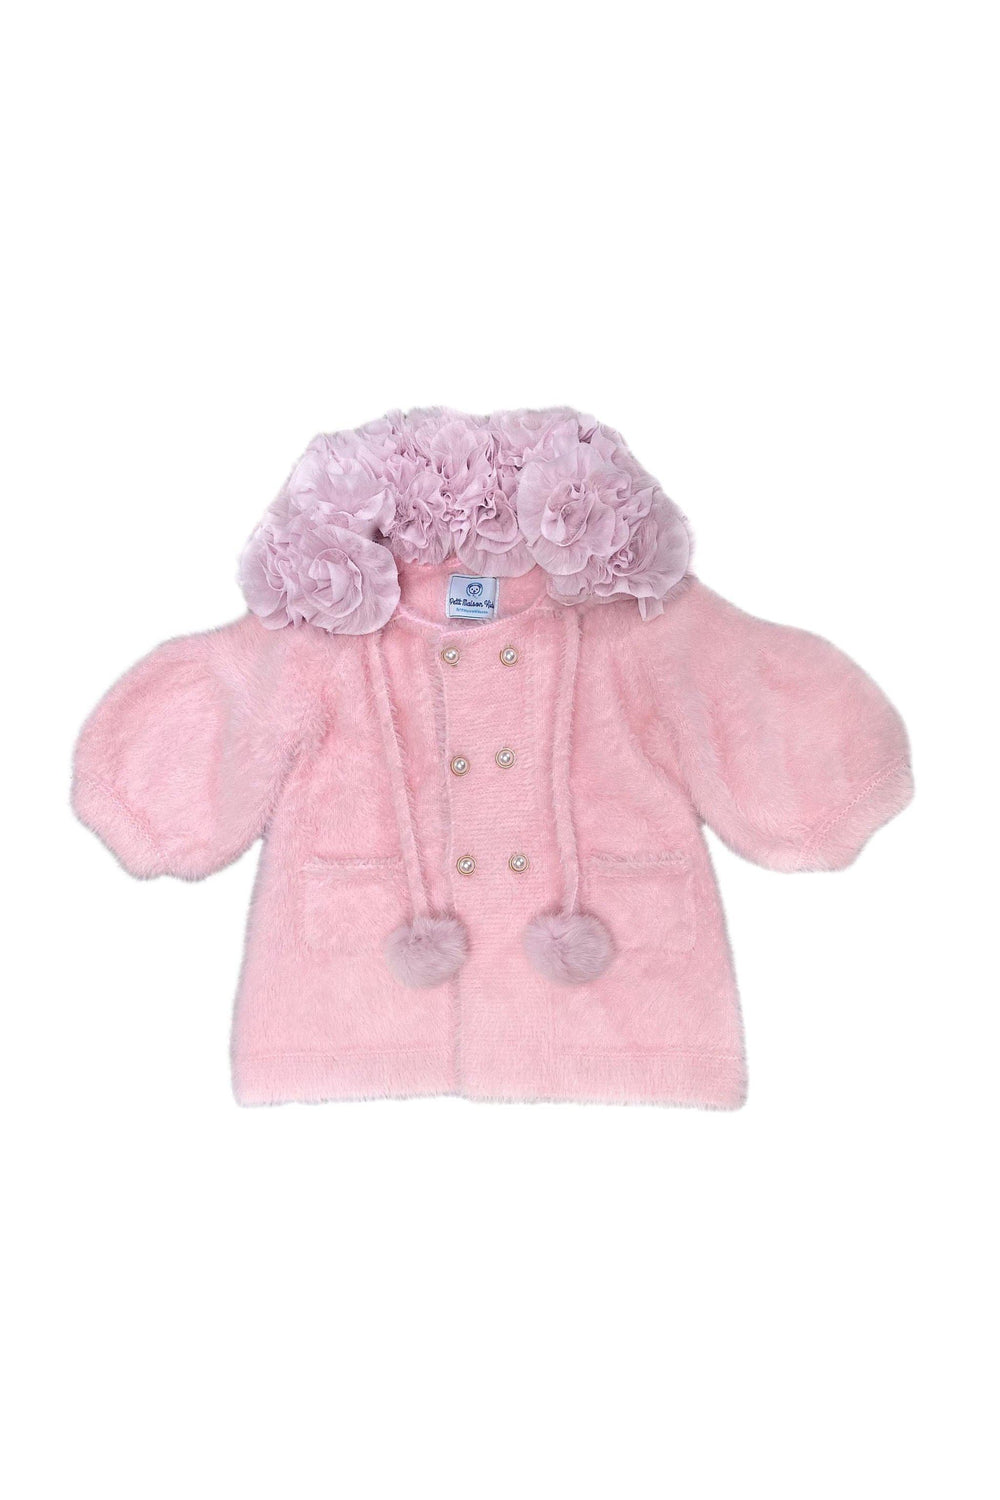 Petit Maison "Milana" Pink Super Soft Jacket | Millie and John